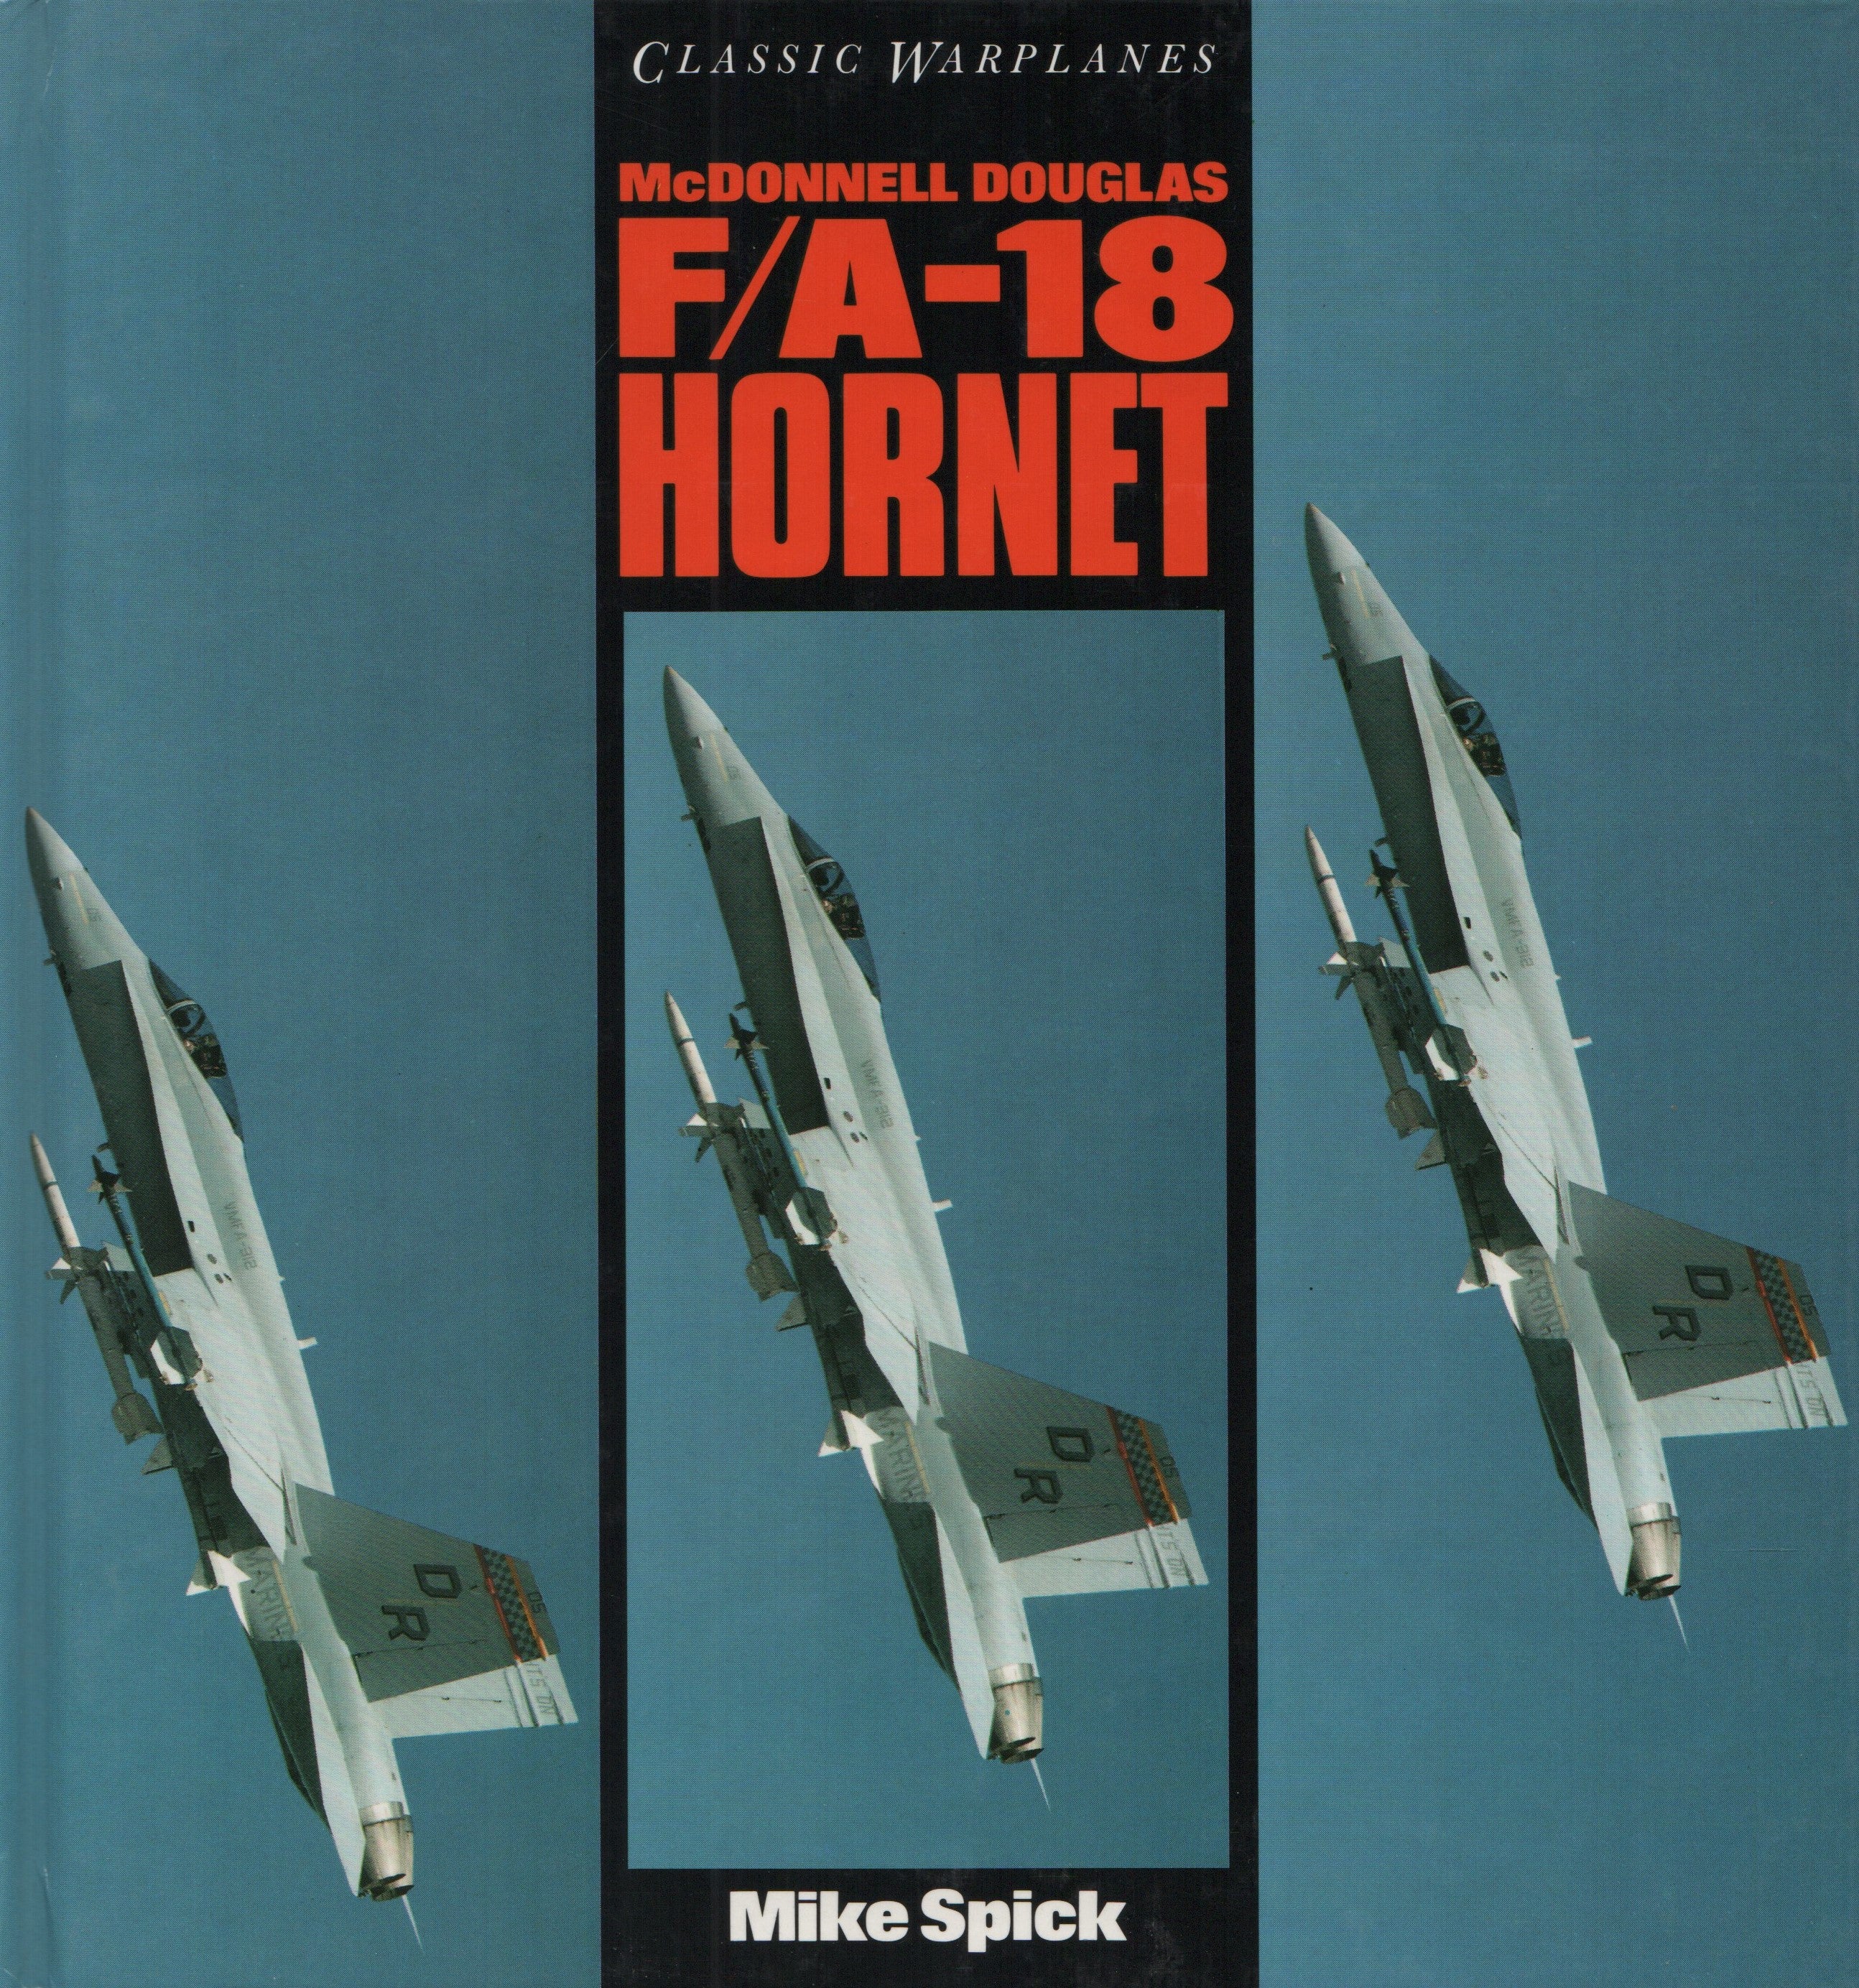 SPICK, MIKE. McDonnell Douglas : F/A-18 Hornet